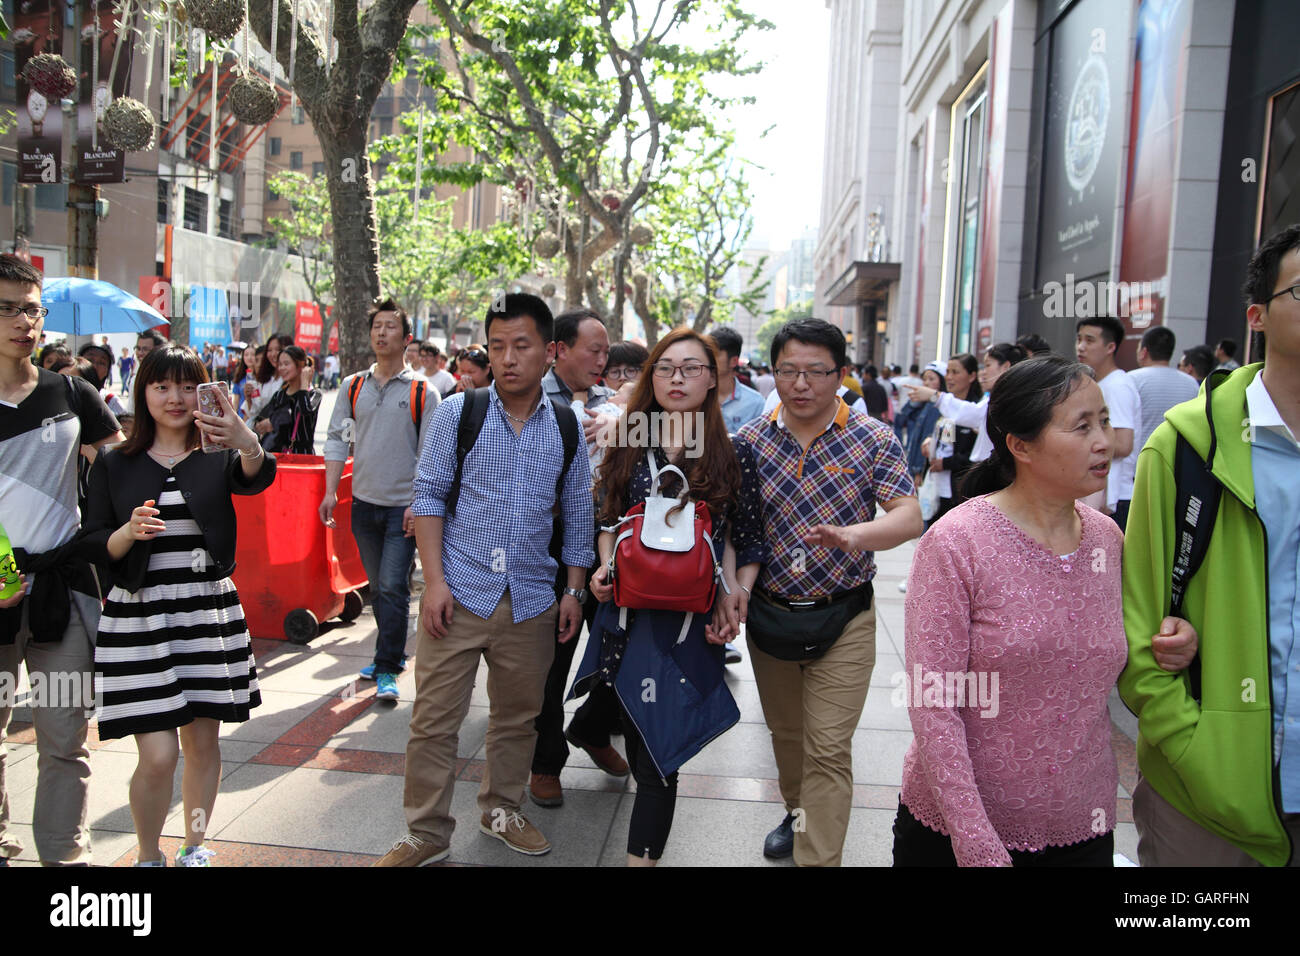 crowds-of-chinese-people-roam-along-the-fashionable-nanjing-street-GARFHN.jpg